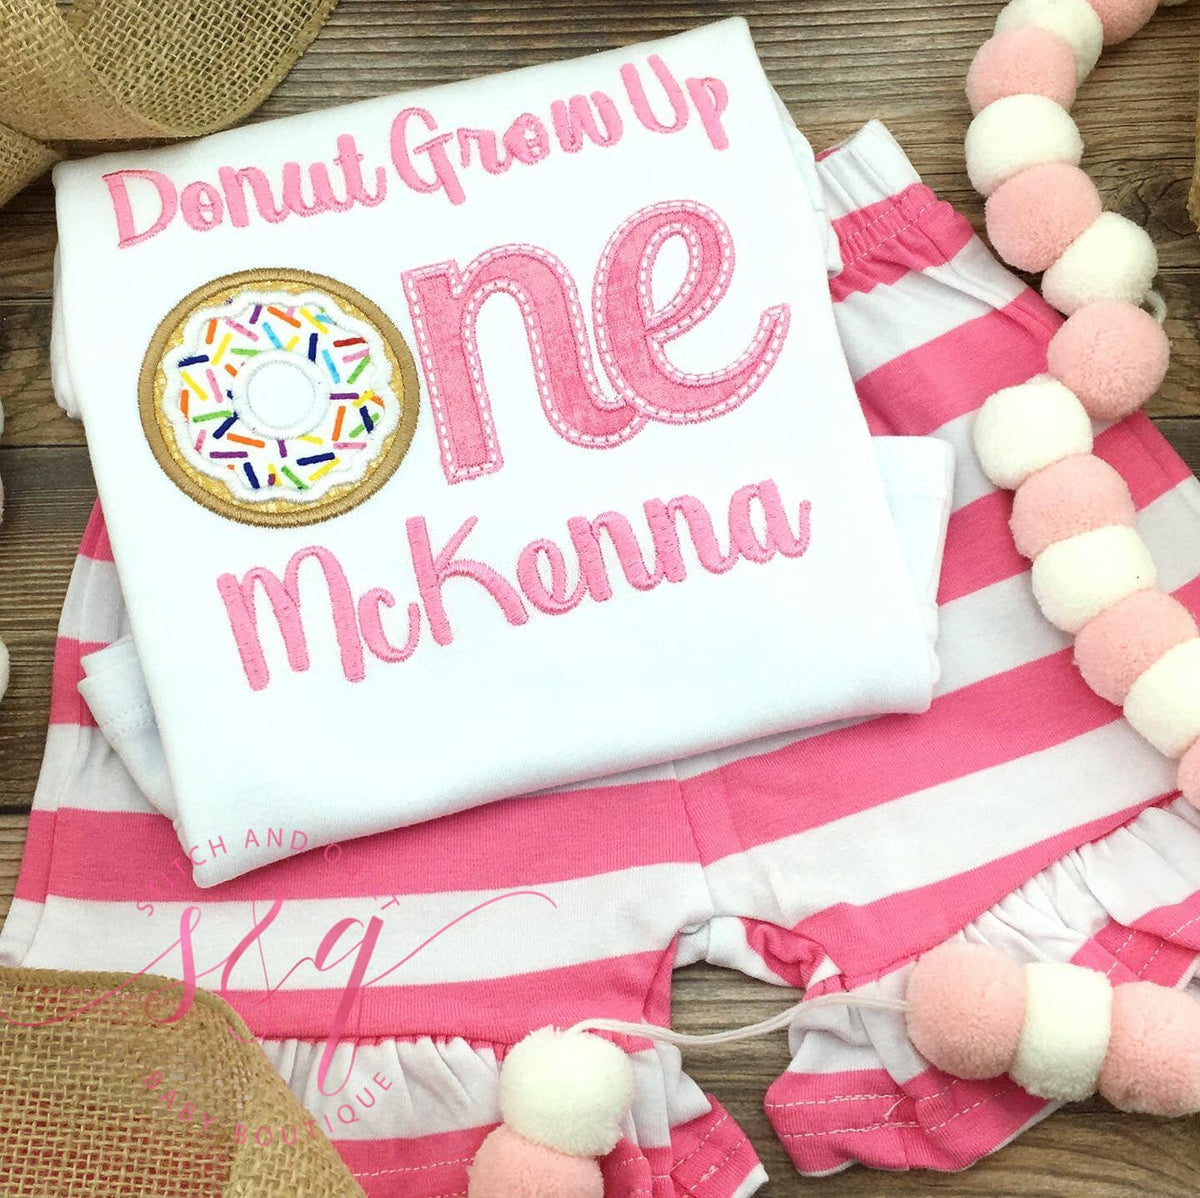 Donut Grown up Girls Donut Birthday Shirt, Birthday Donut Shirt, Personalized Donut Birthday Shirt, Donut Party, Donut Shirt